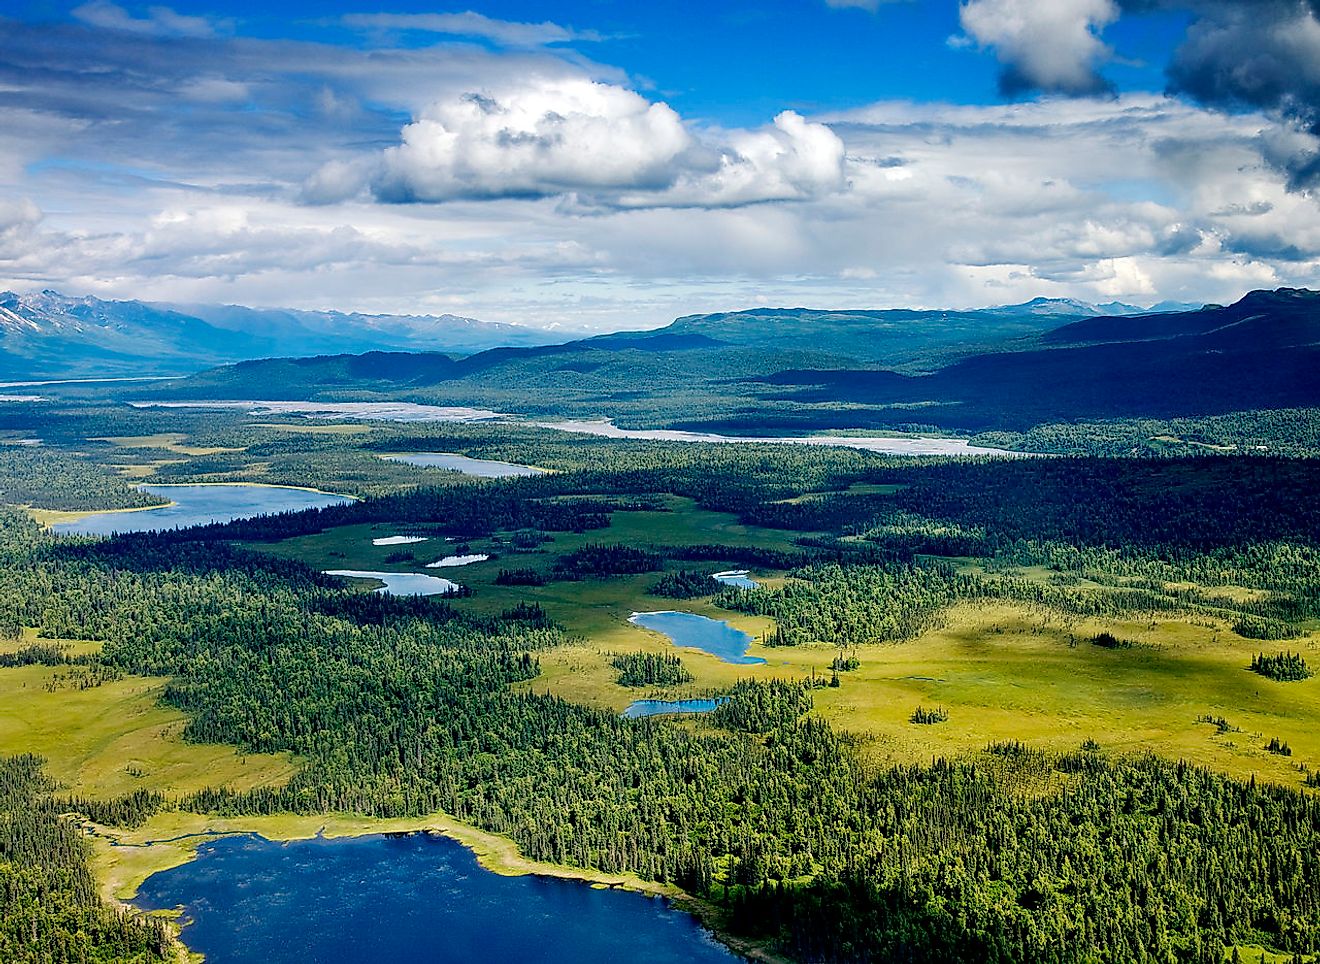 Denali National Park, Alaska. Image credit: Carol M. Highsmith/Public domain